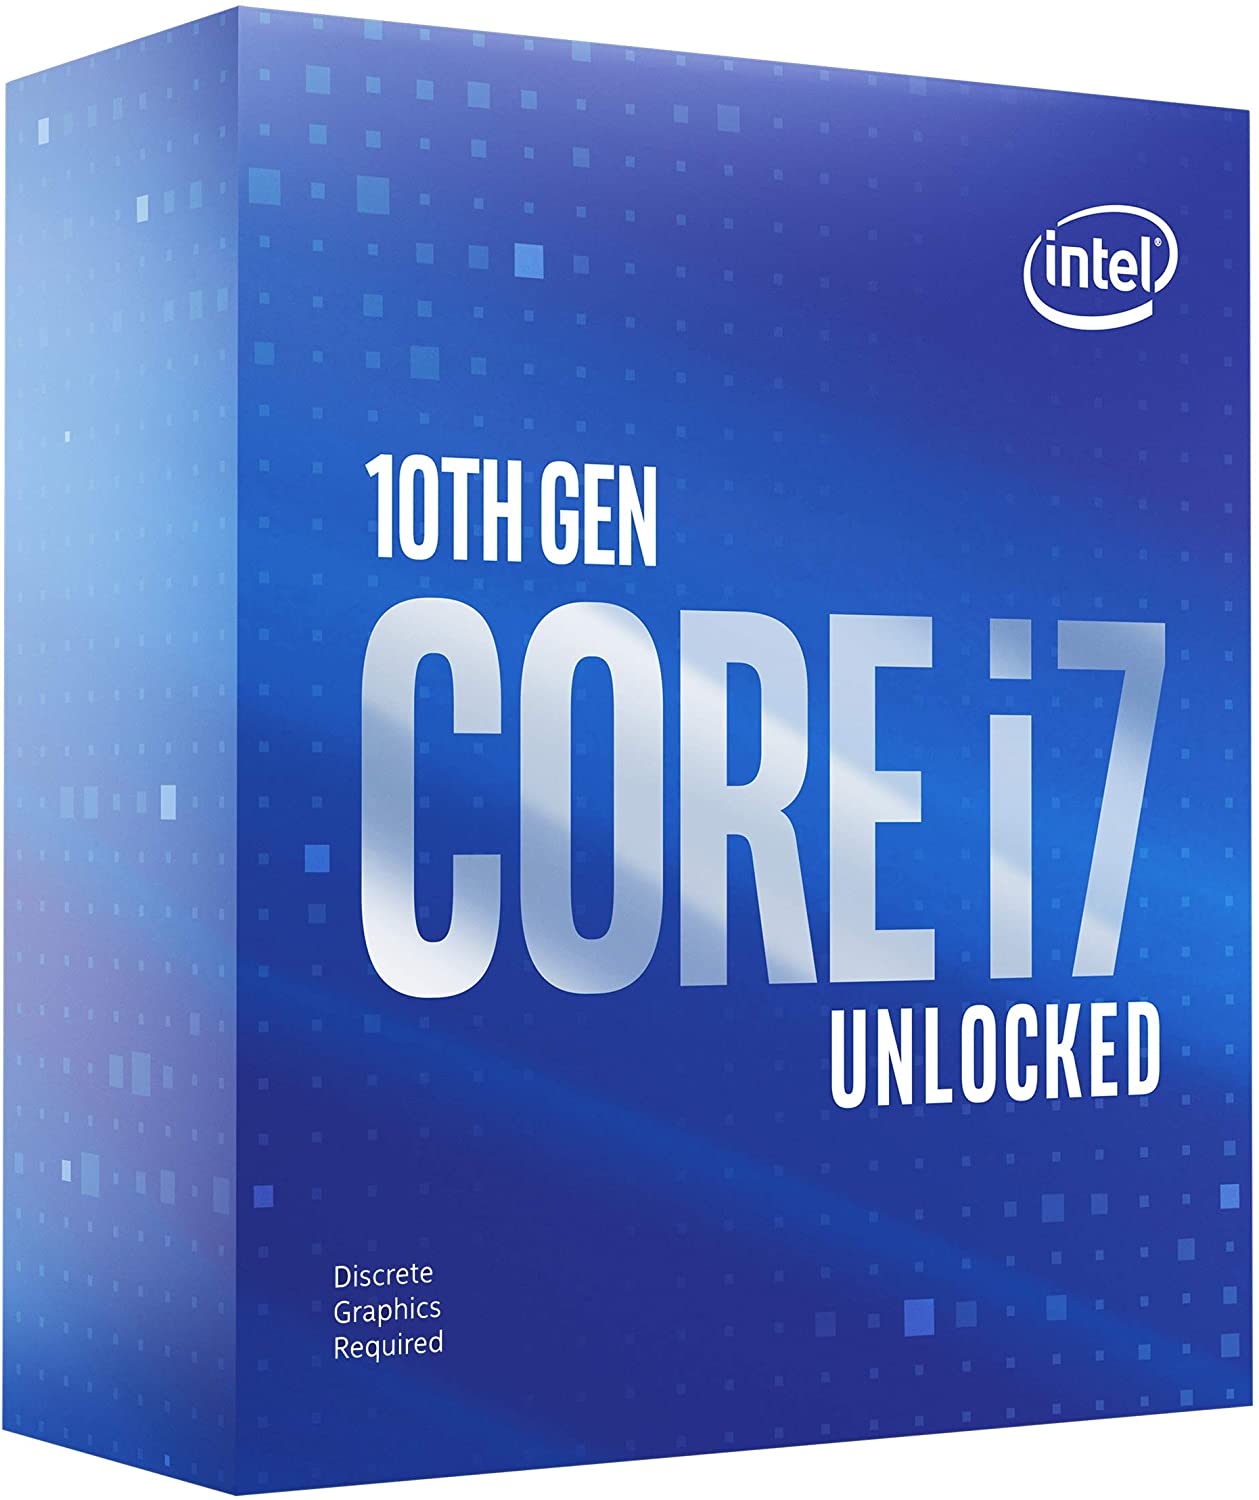 Intel Core i7-10700KF 8-Core LGA1200 Unlocked Desktop Processor (10 Gen) $247.15 + Free Shipping via Amazon